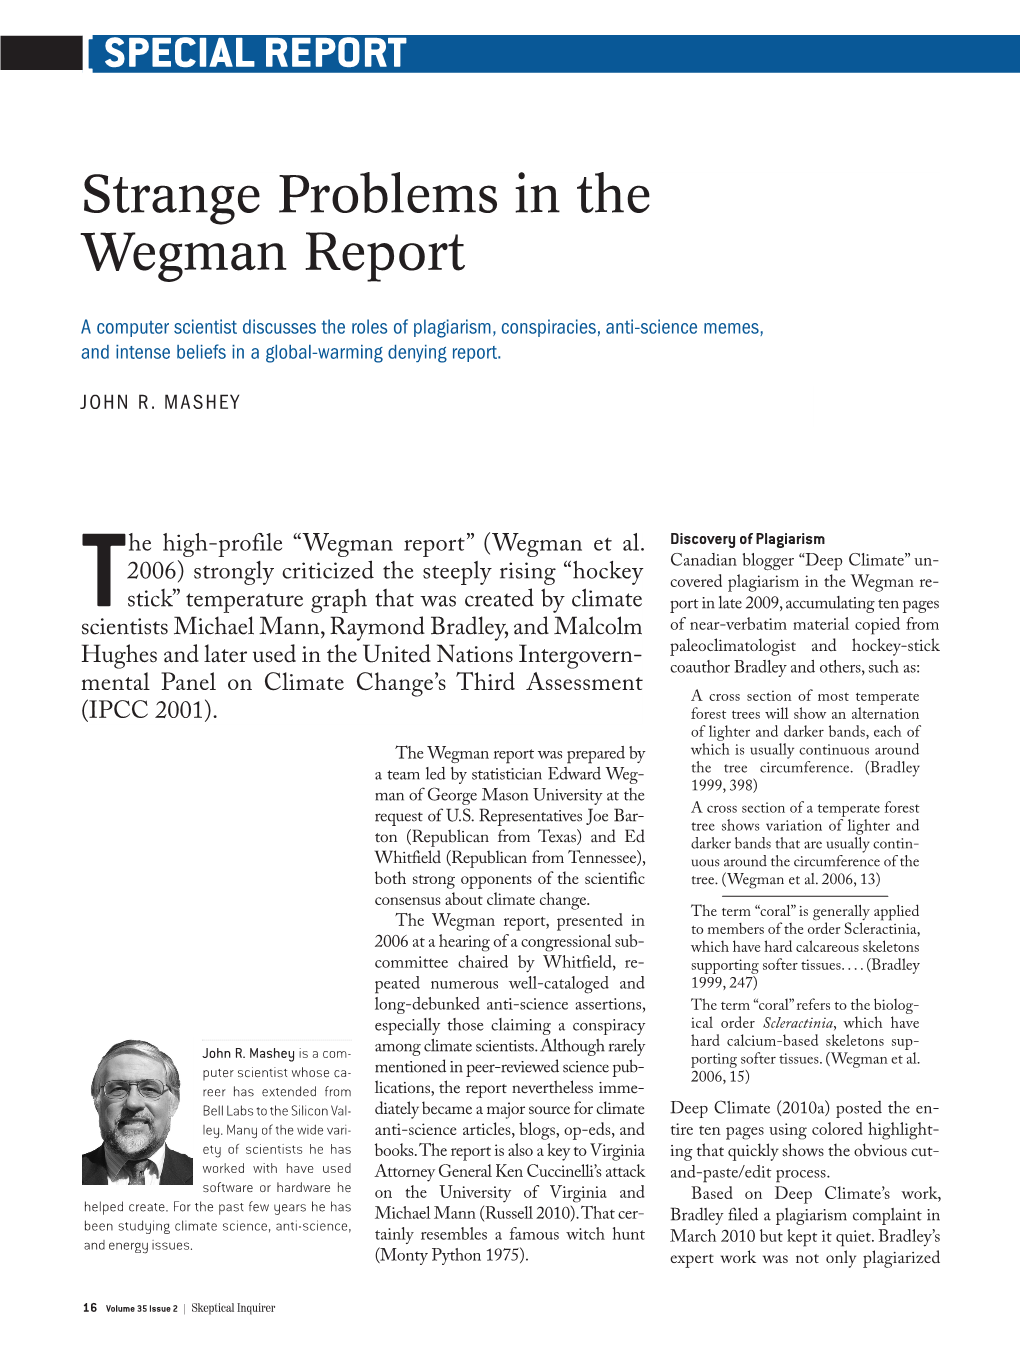 Strange Problems in the Wegman Report